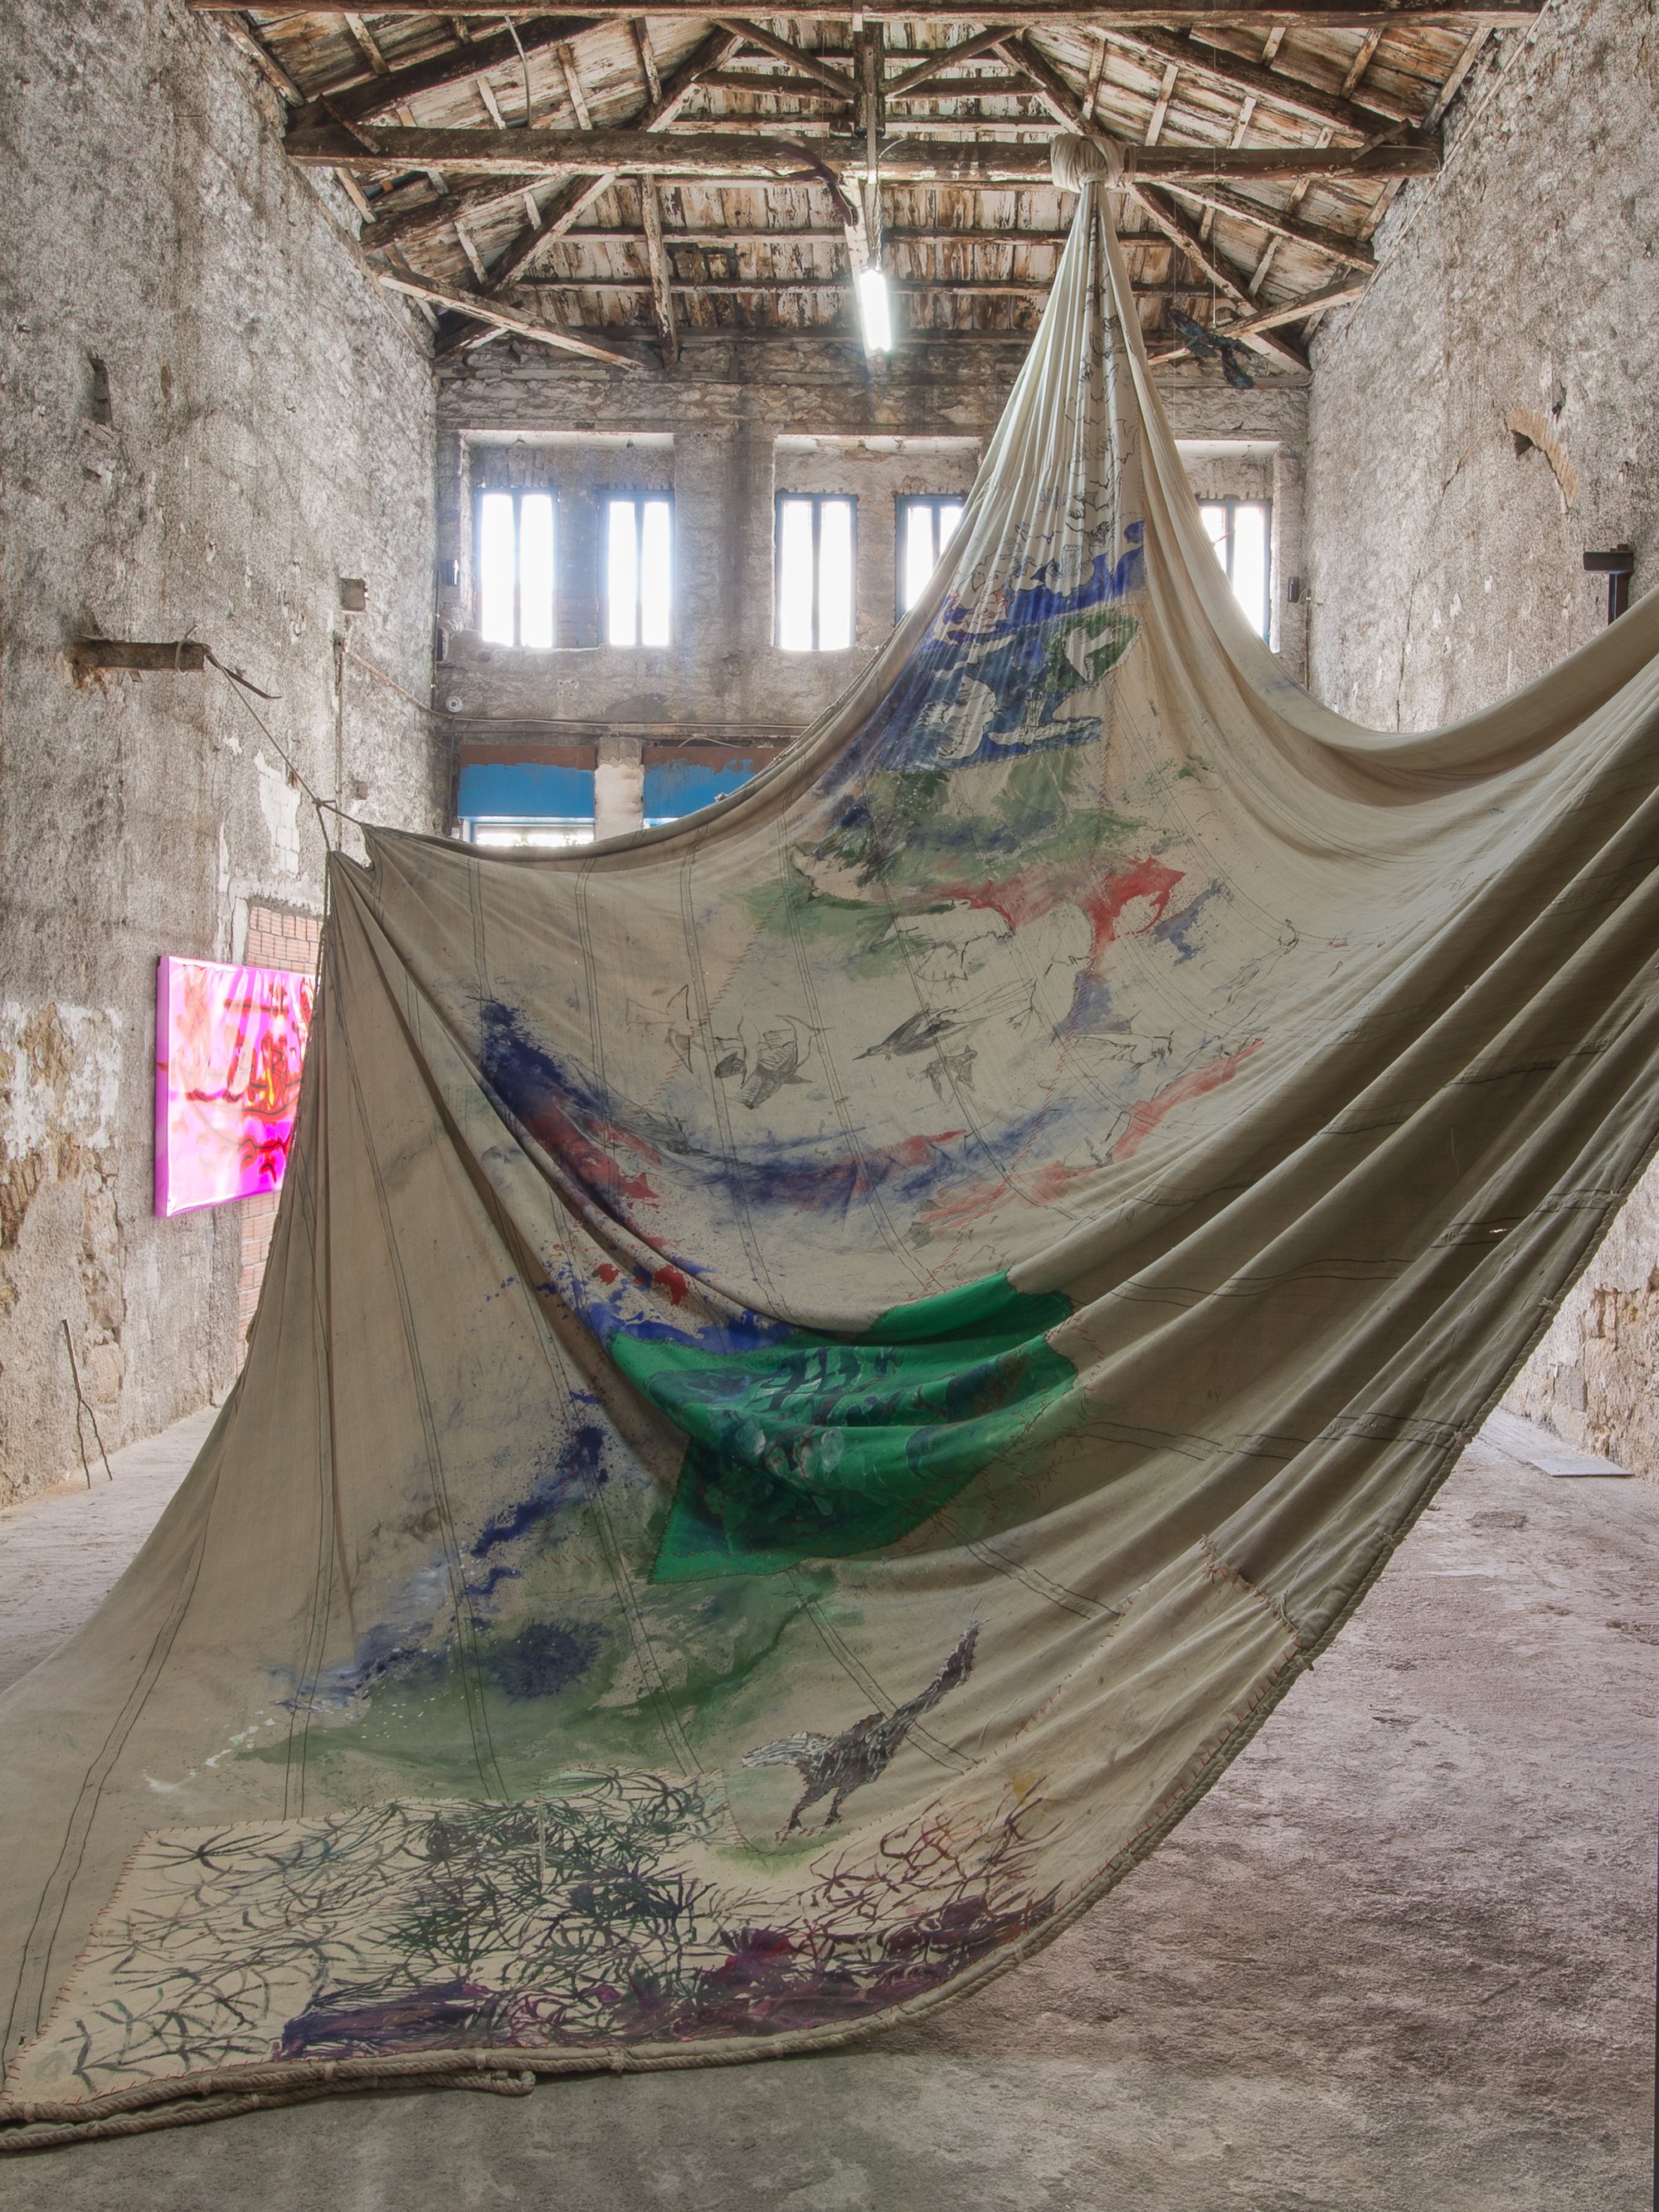 Anna Boghiguian, Trade + Birds, sail canvas, painted Birds: plaster, paint, wax on gauze bandage, 2000 x 800 cm (787 3/8 x 315 in), 2018